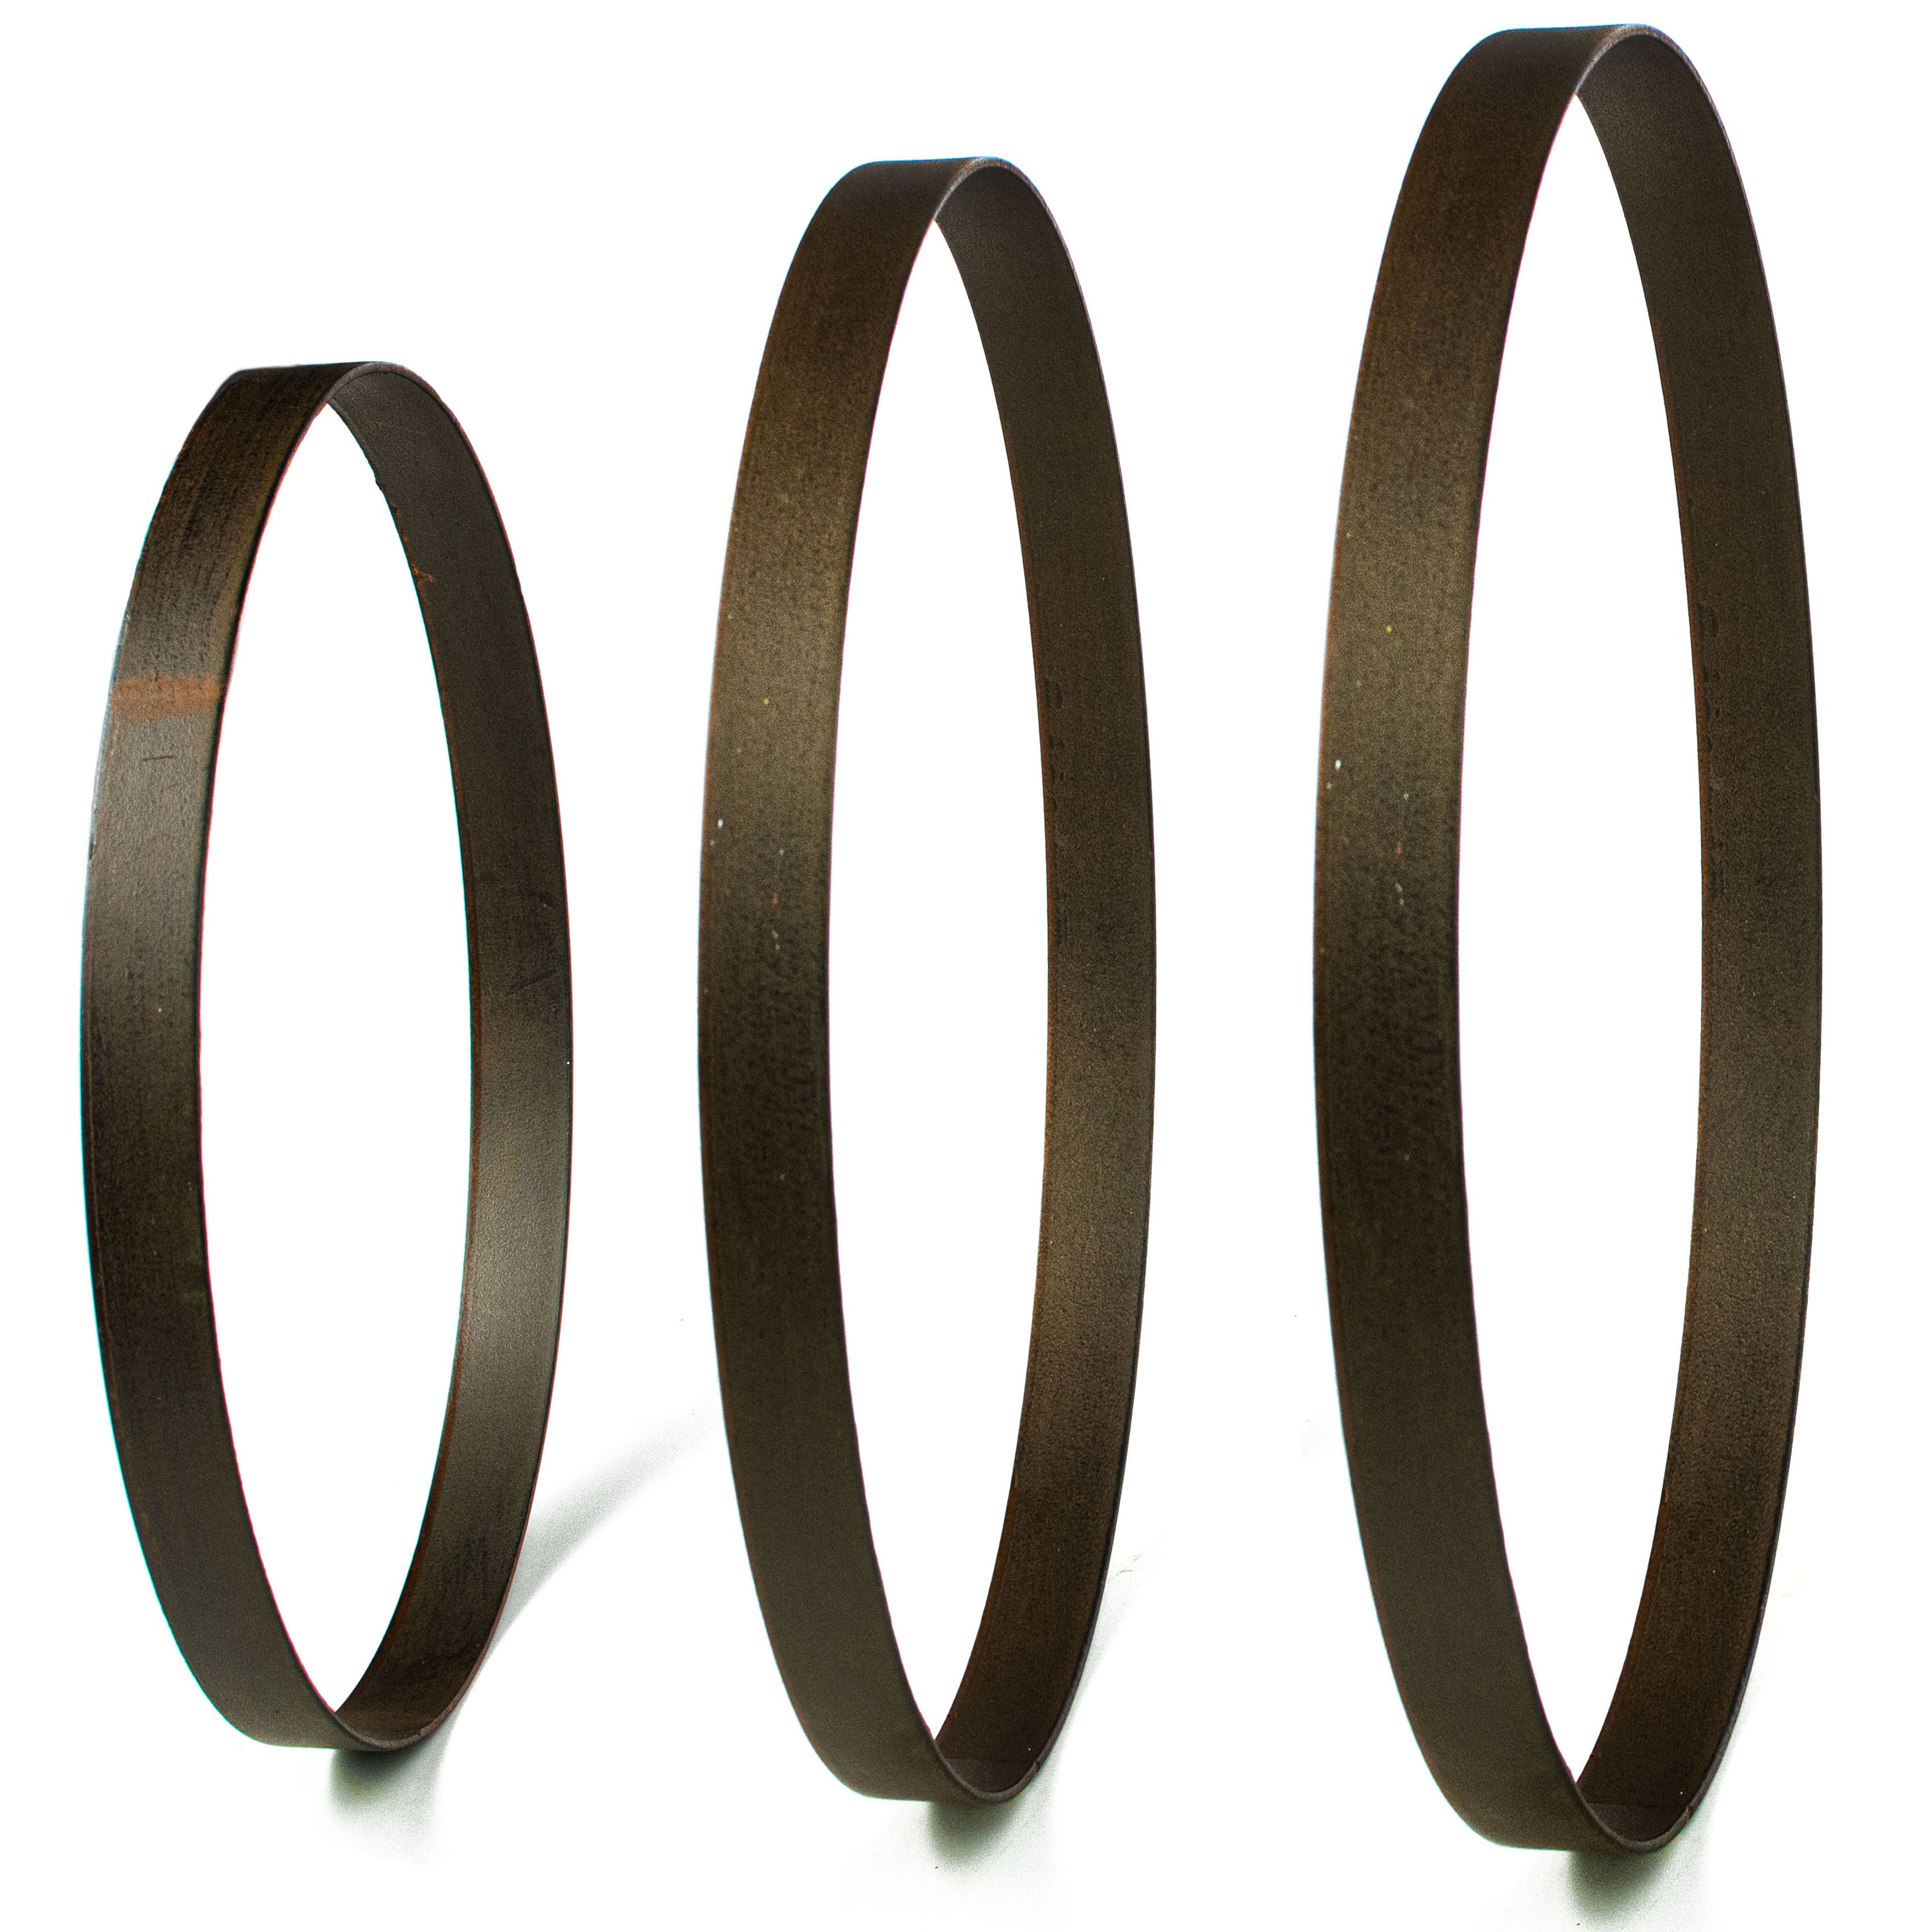 15.75-17.75" Metal Wreath Ring: Antique Rust (Set of 3)